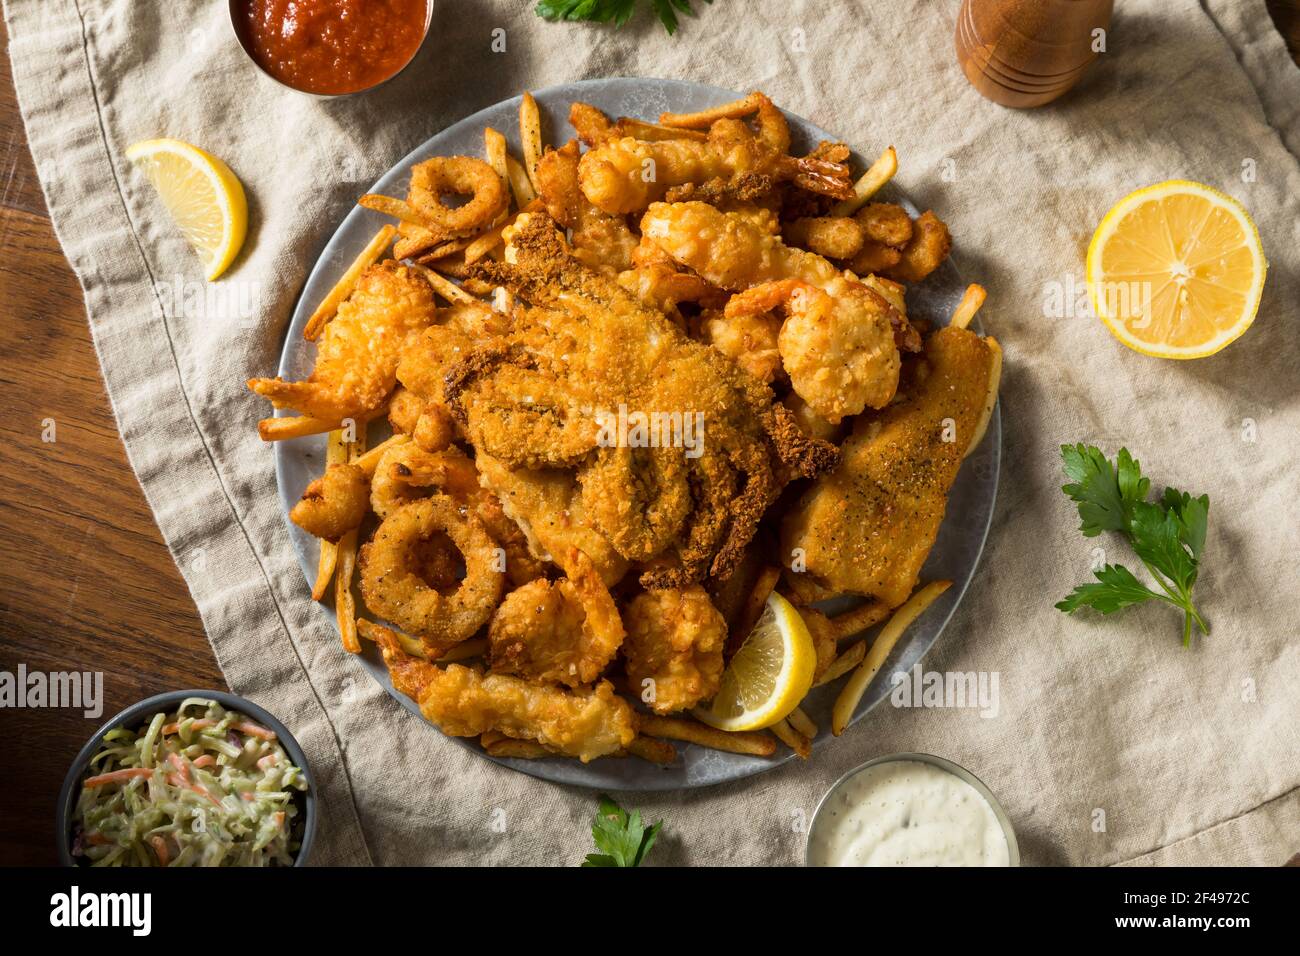 Homemade Deep Fried Seafood Platter with Fries and Tartar Sauce Stock Photo